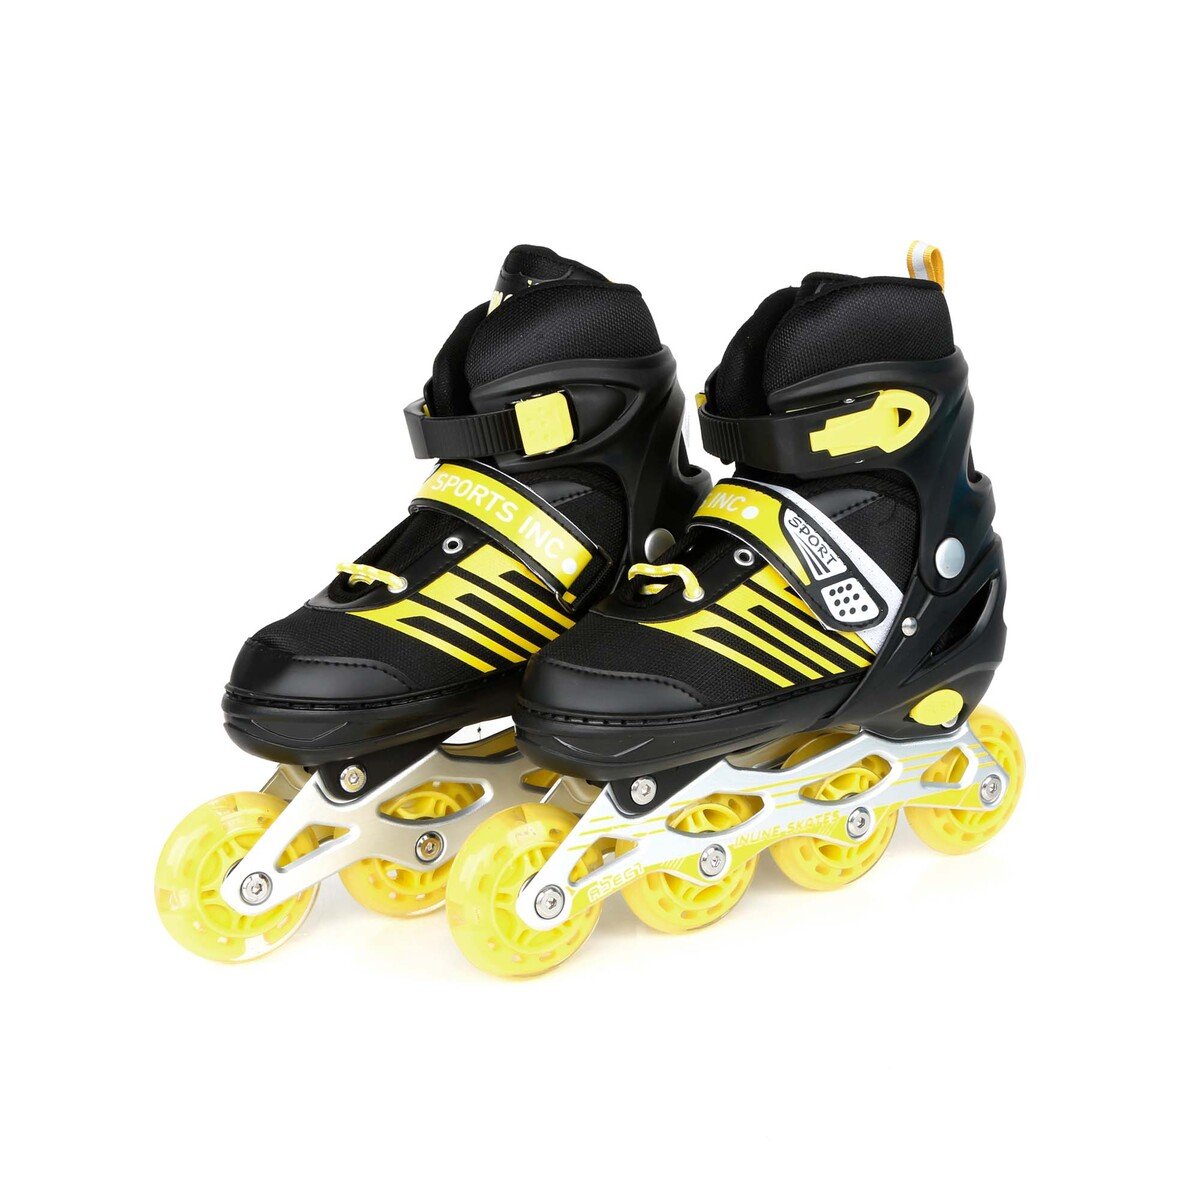 Sports Inc Skating Shoe, 151, Black/Yellow, Size: 29-33